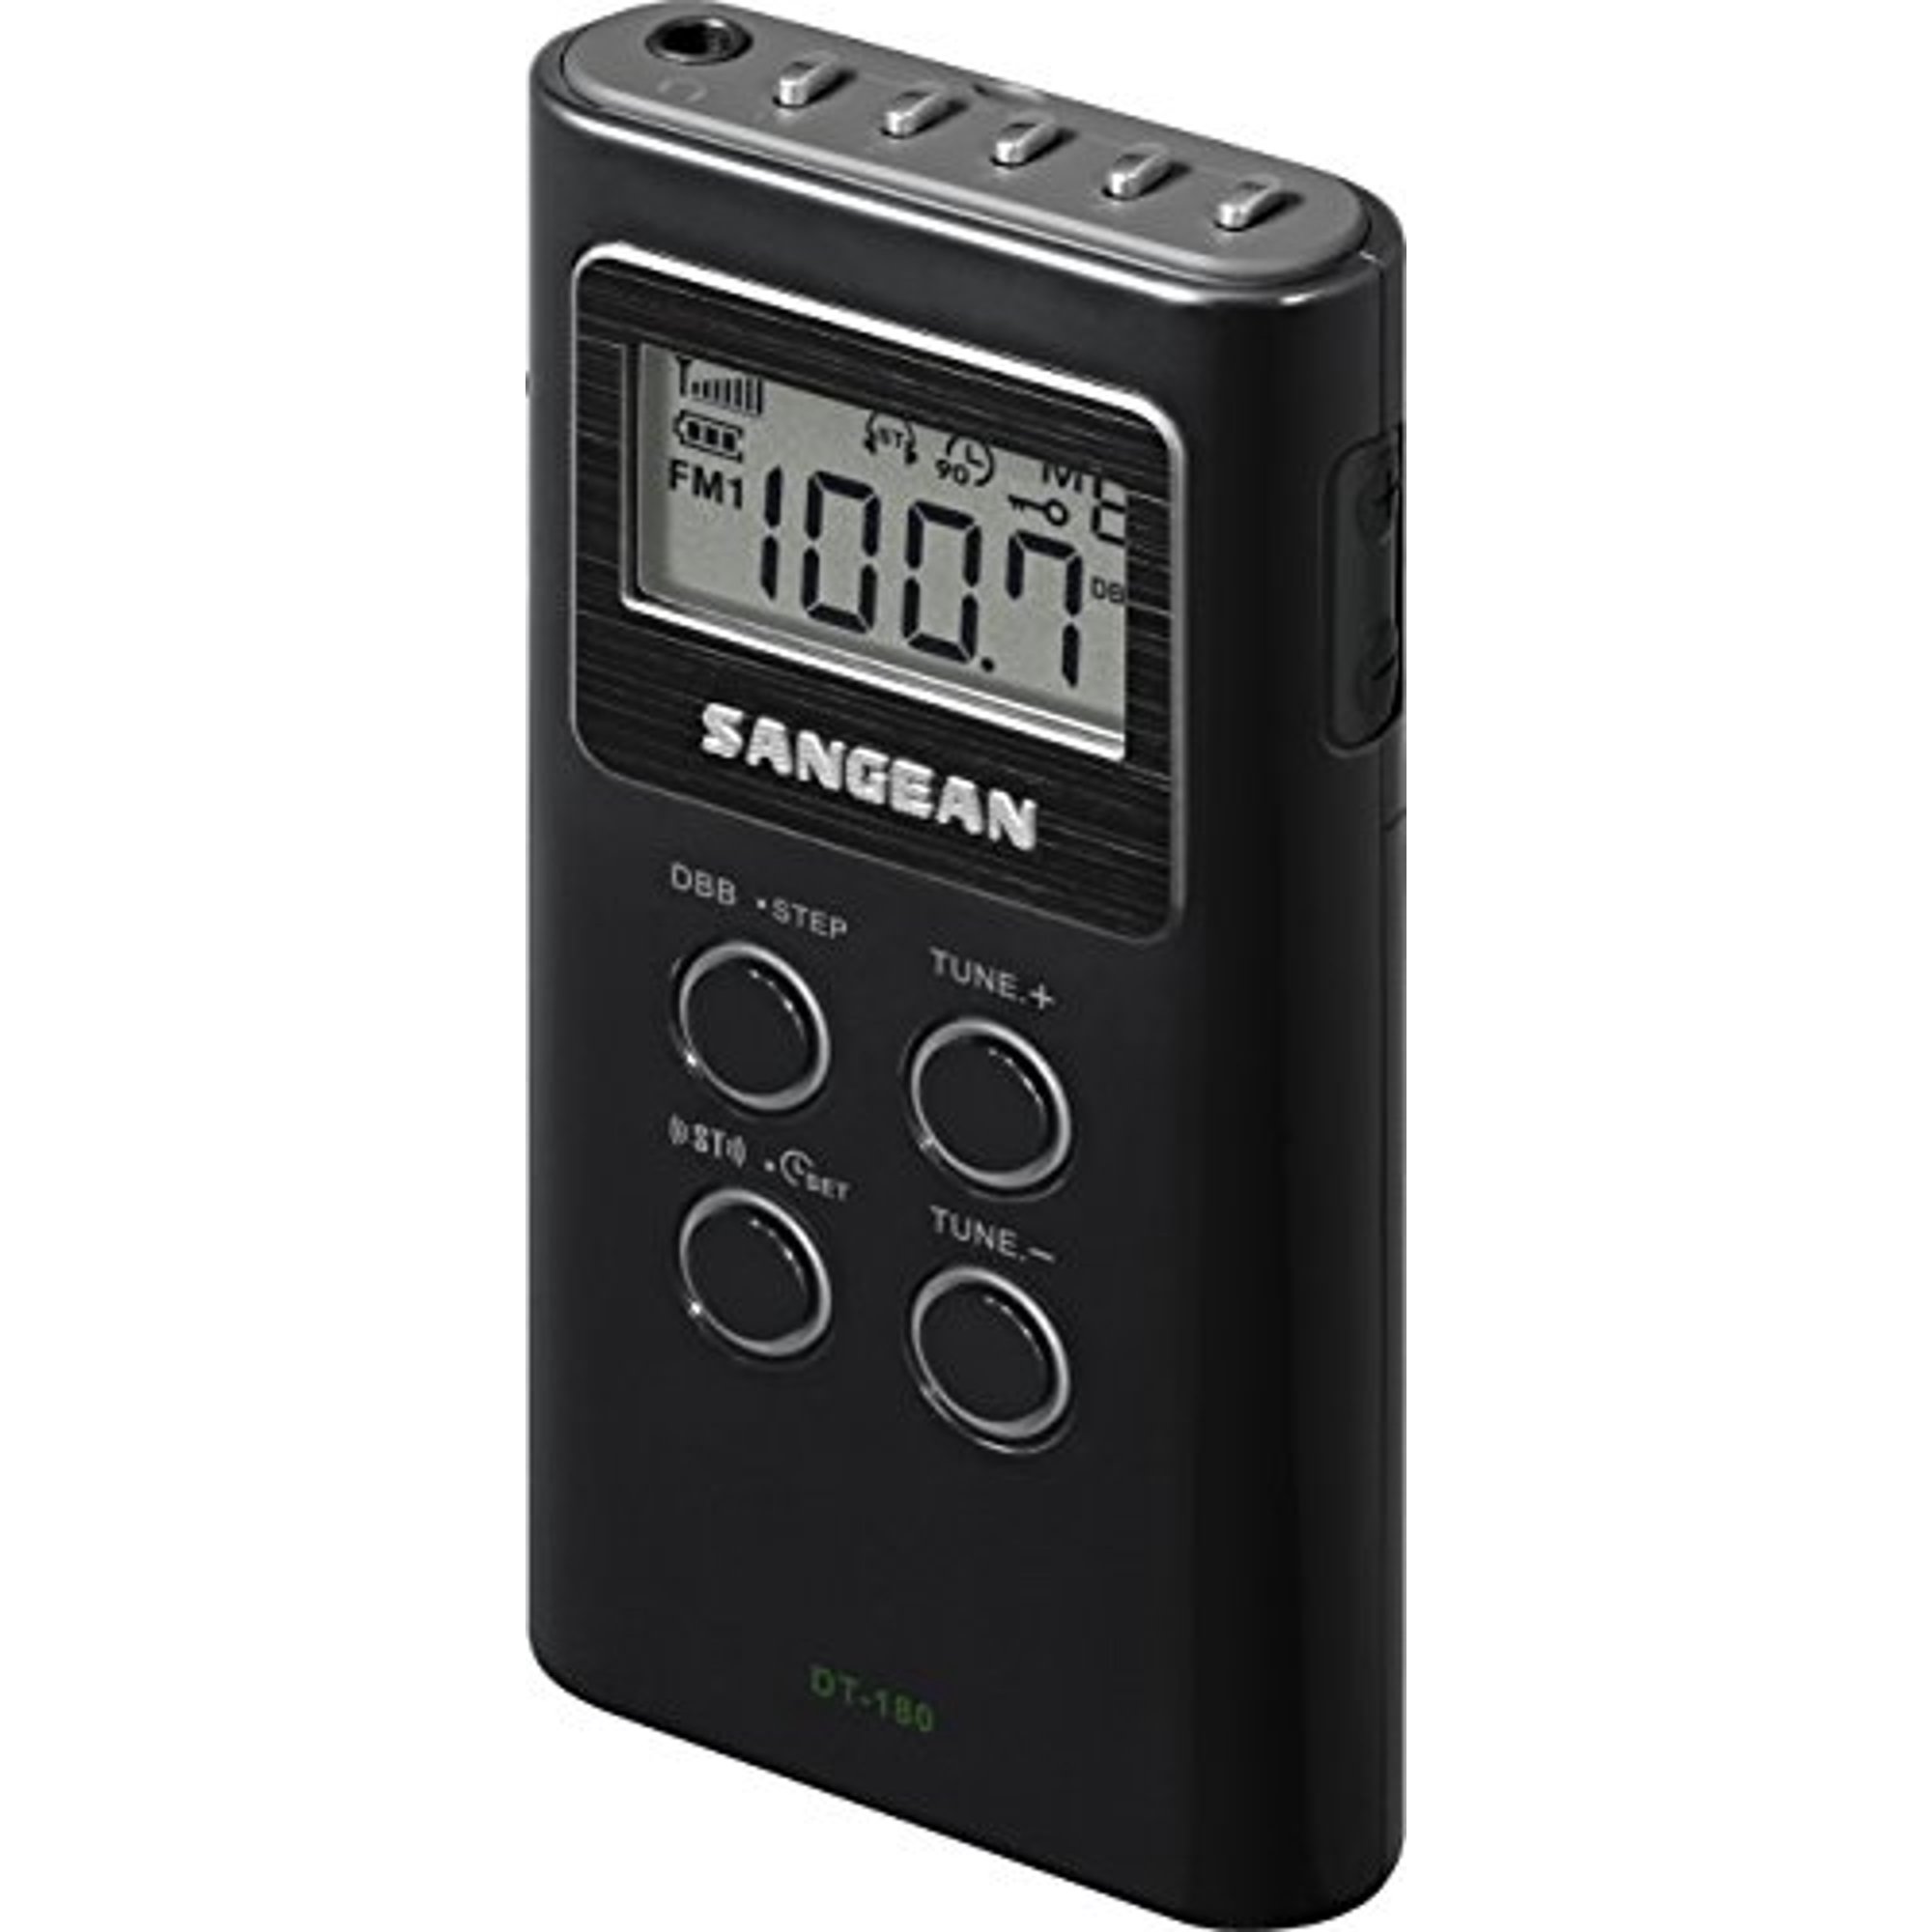 Sangean Radio analógica de bolsillo, SR-35 AM/FM, color negro